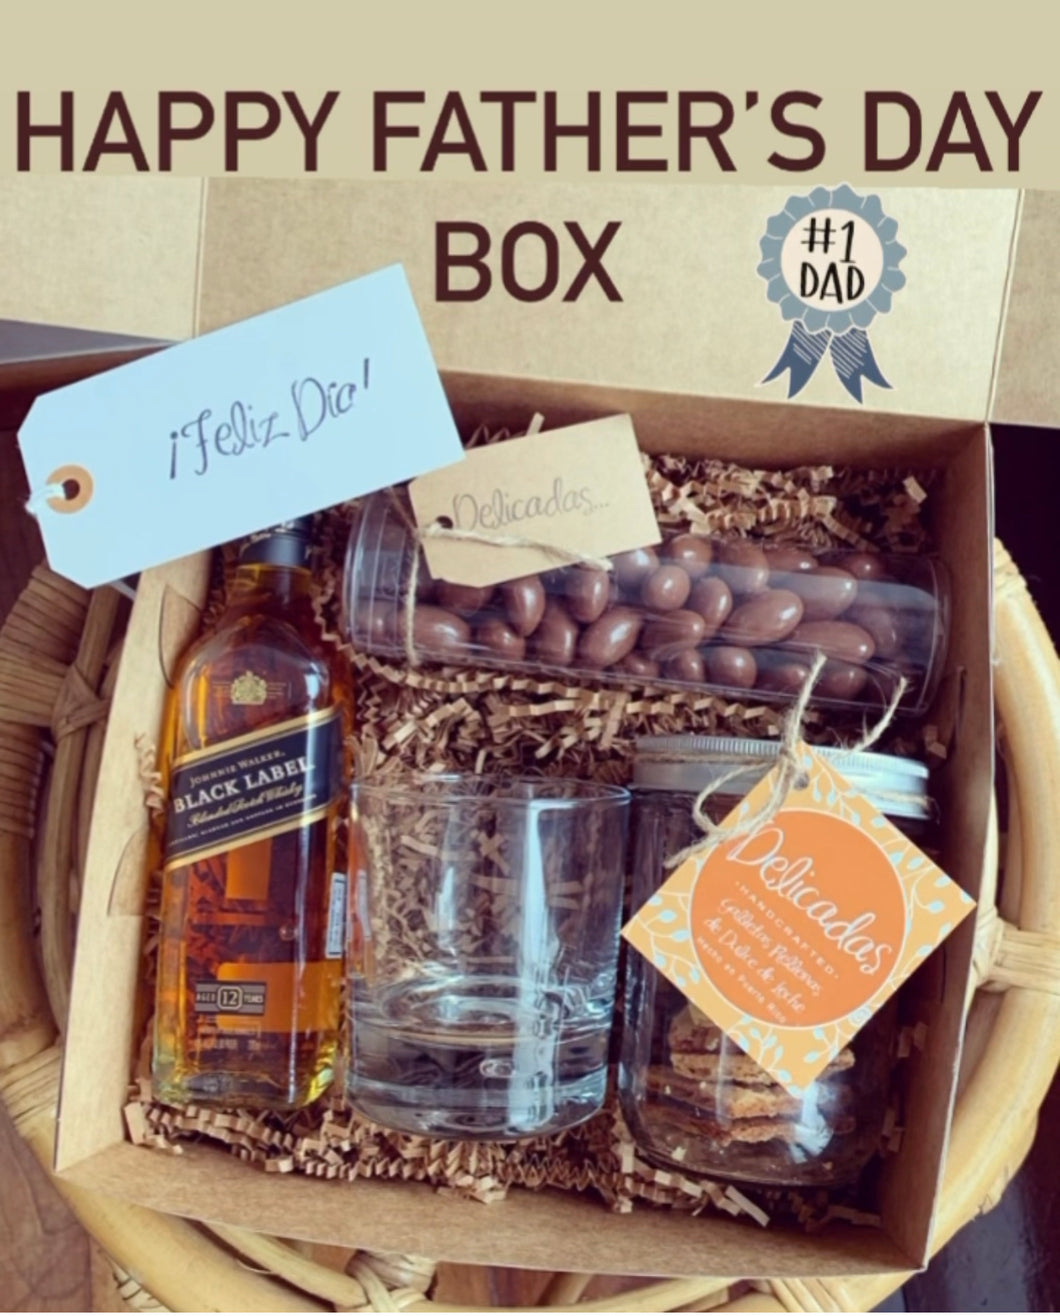 Happy father’s day box